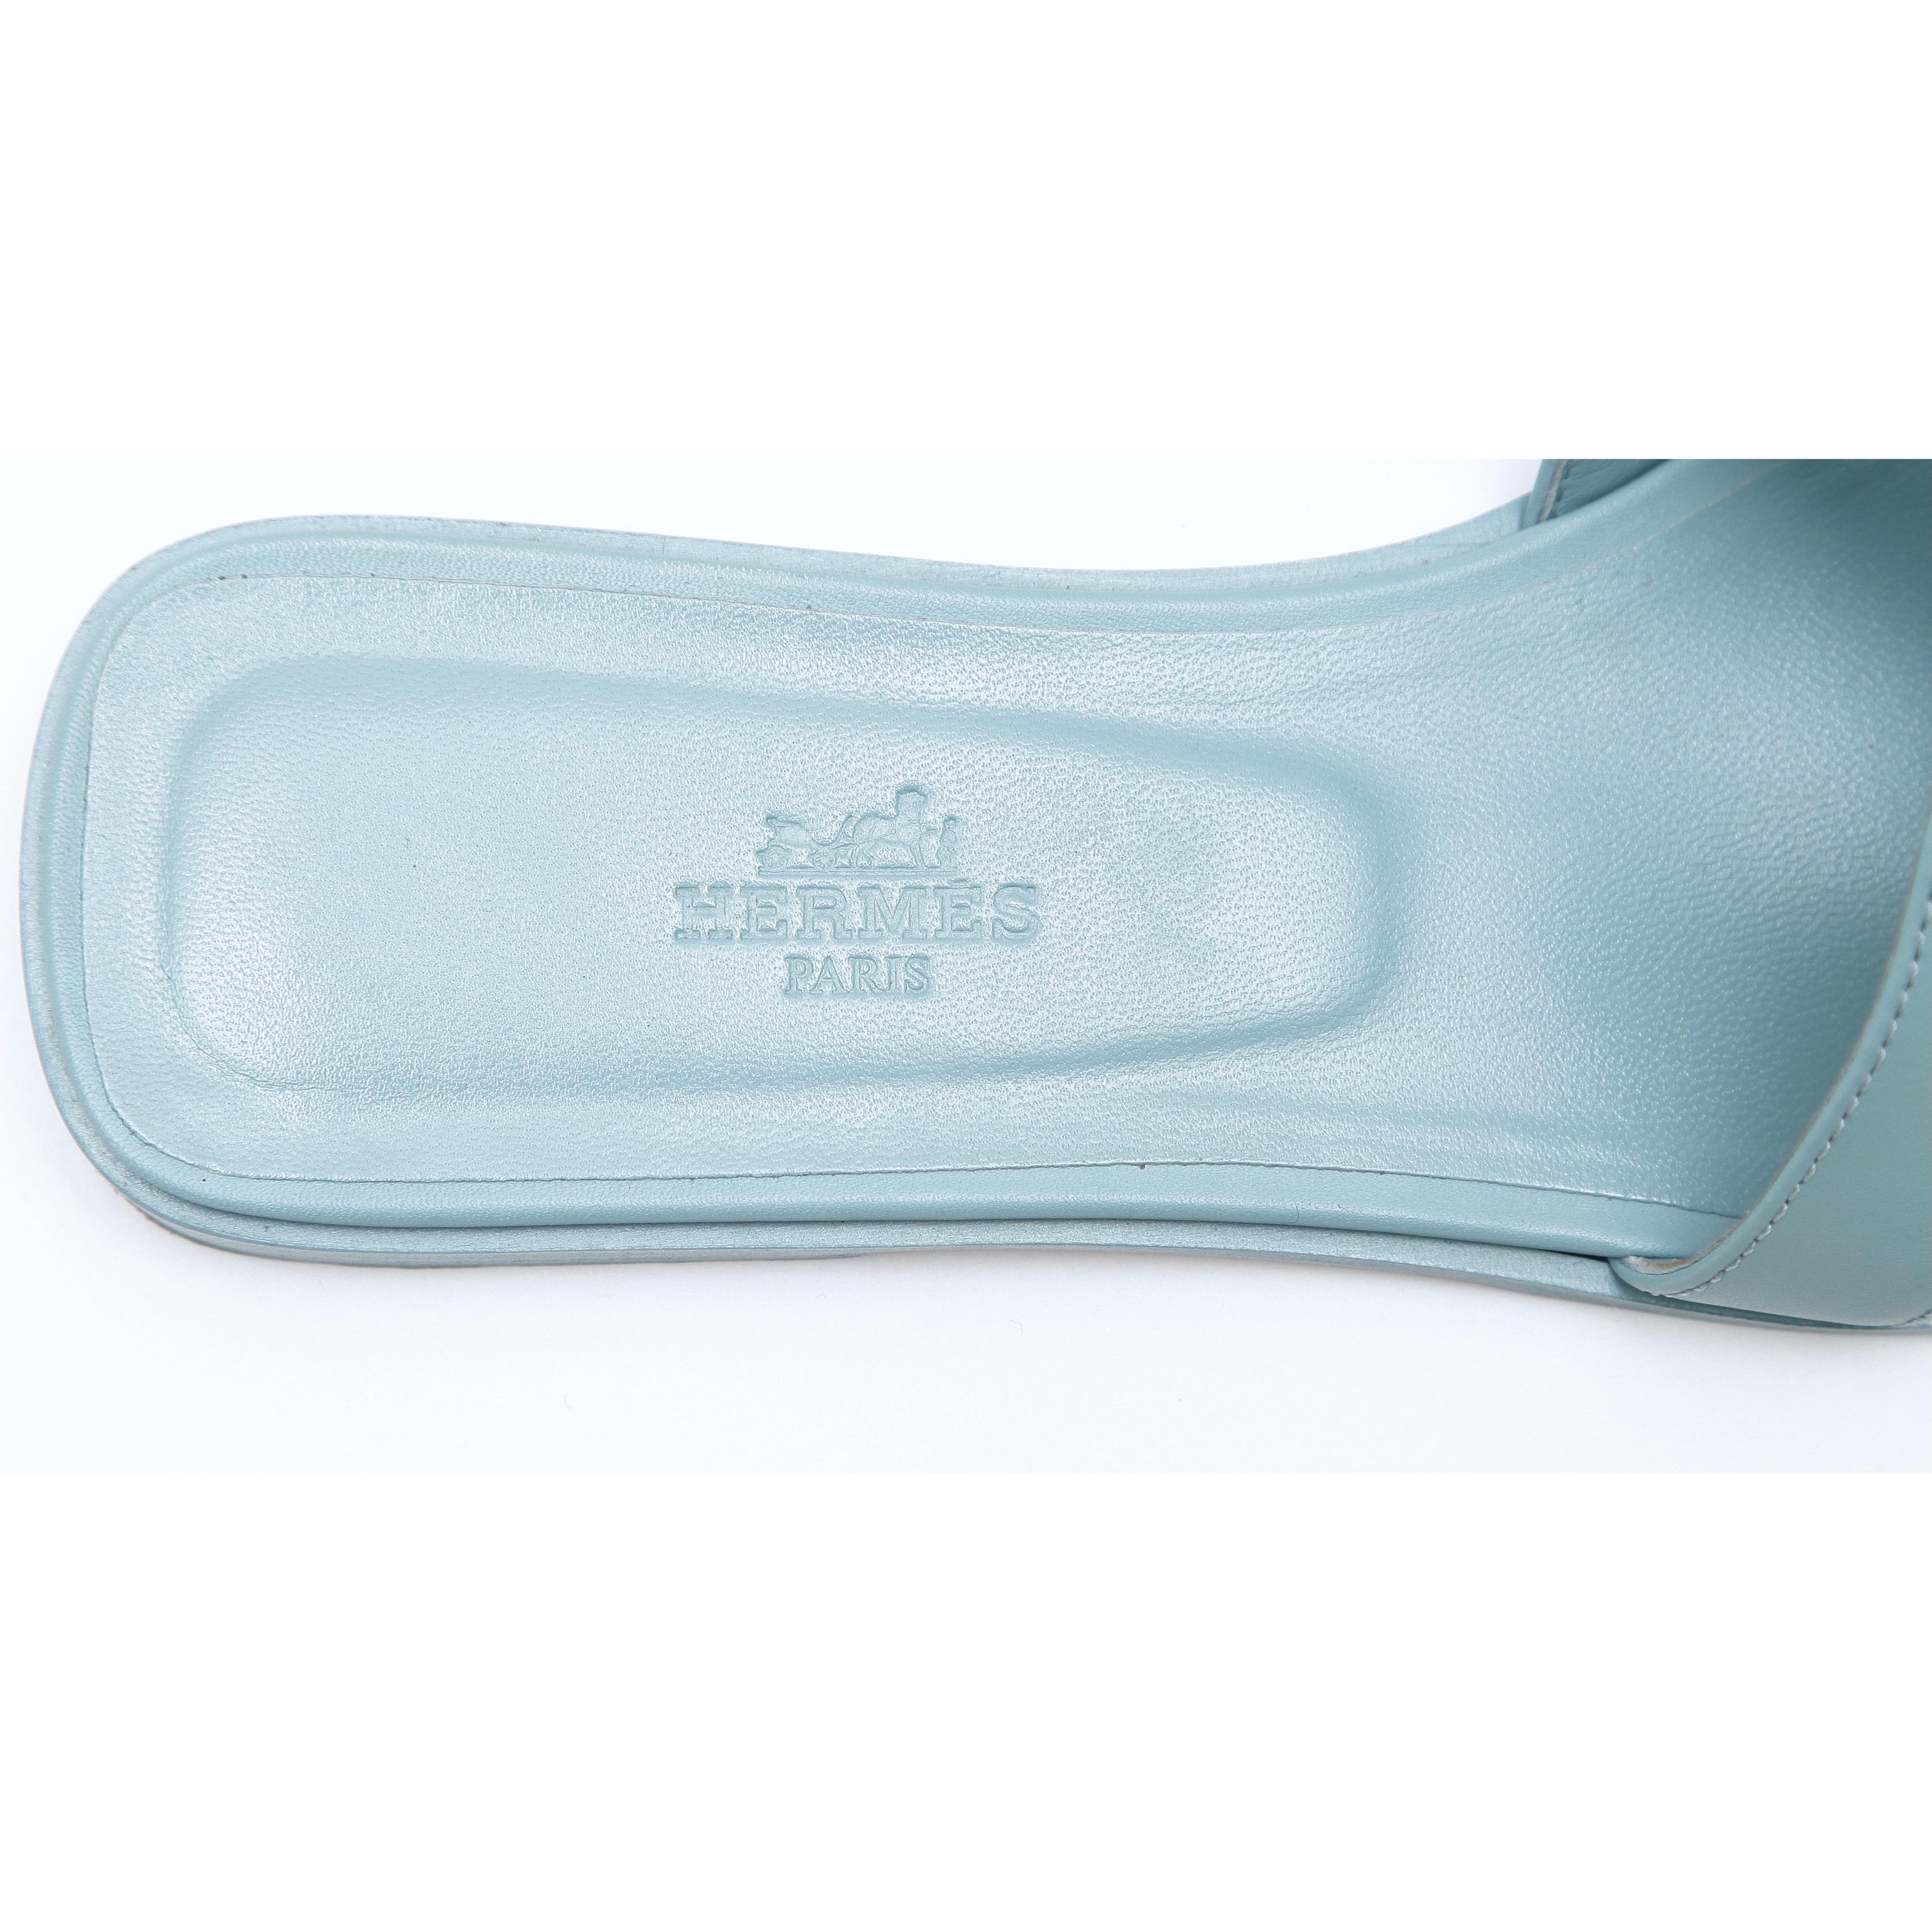 HERMES Blue Leather Slides ORAN Sandals Flat Mule Slip On Shoes Sz 38 1